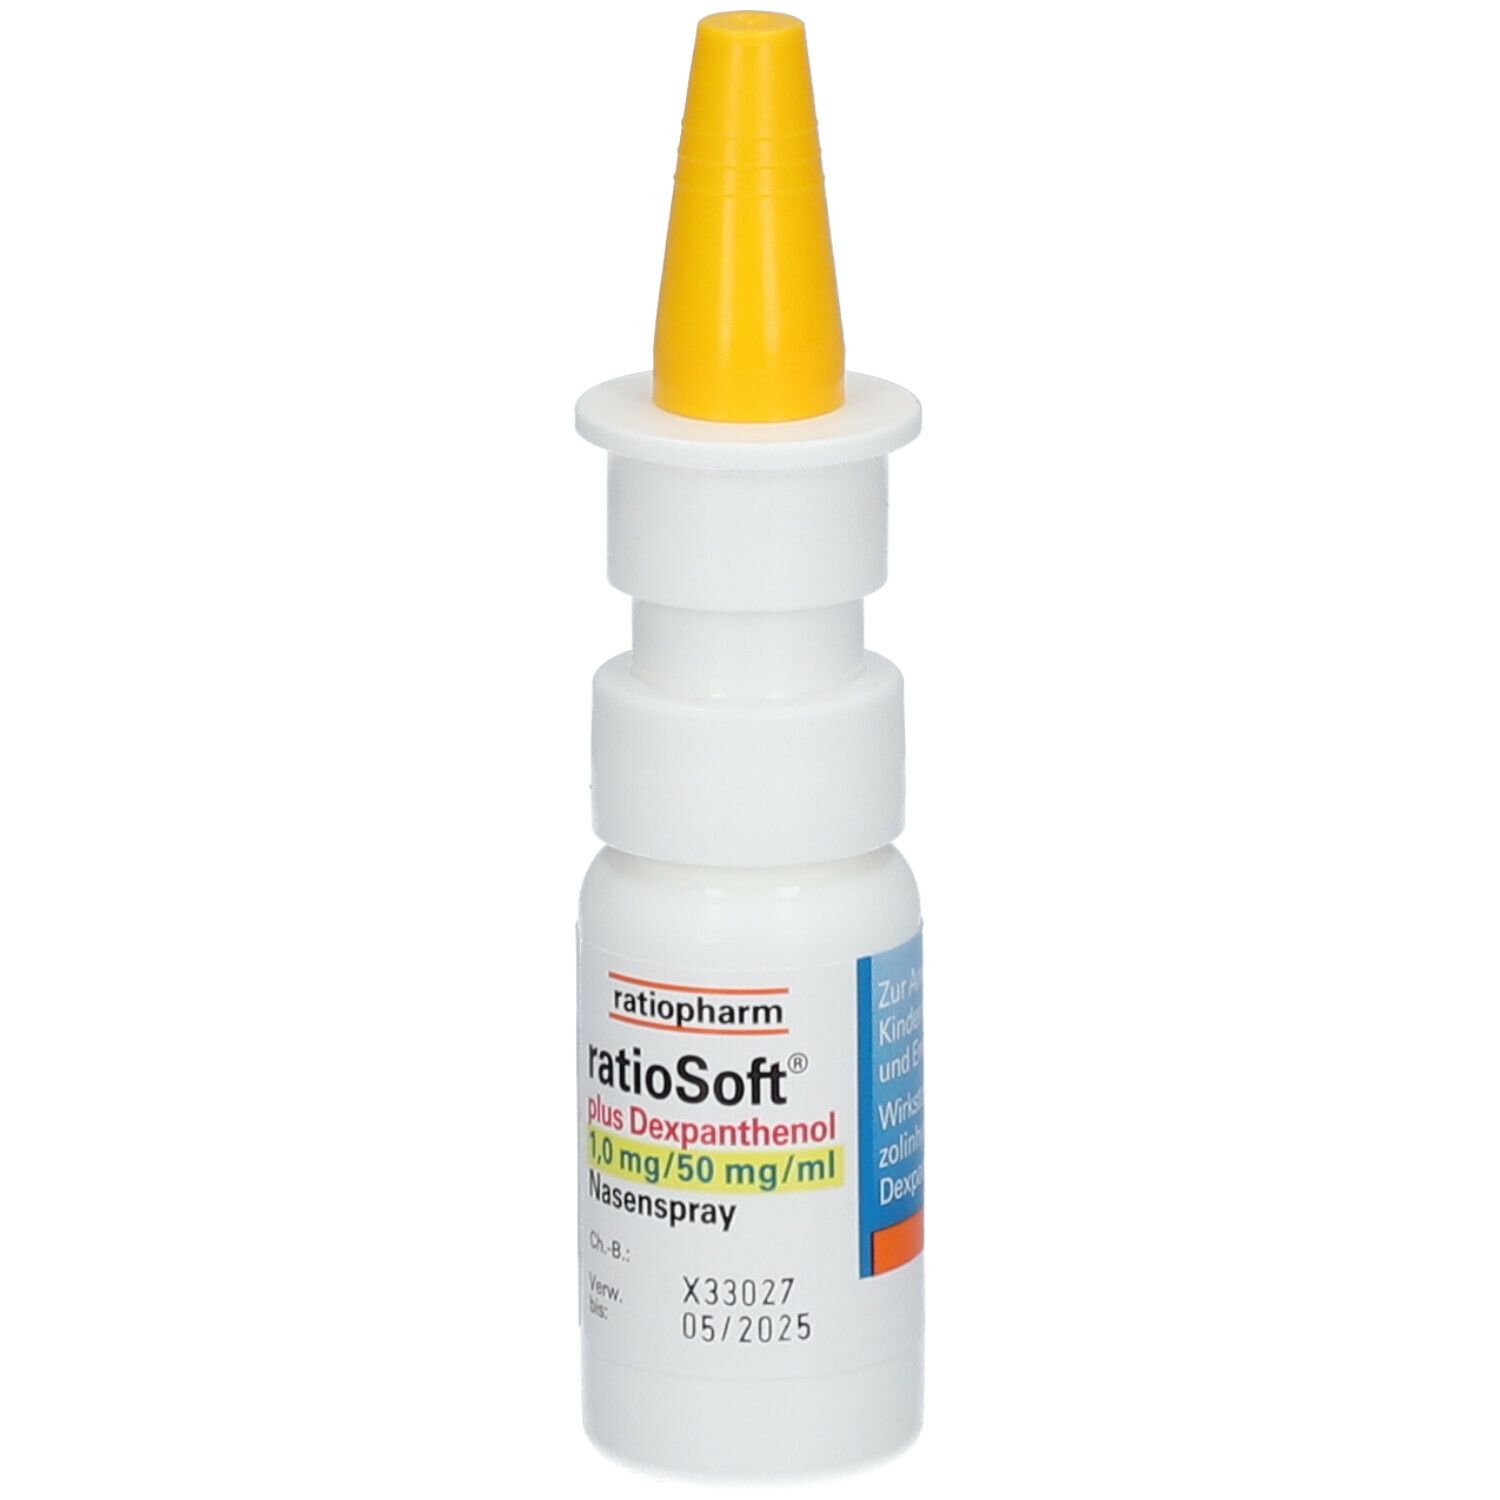 ratioSoft® plus Dexpanthenol 1 mg / 50 mg/ml